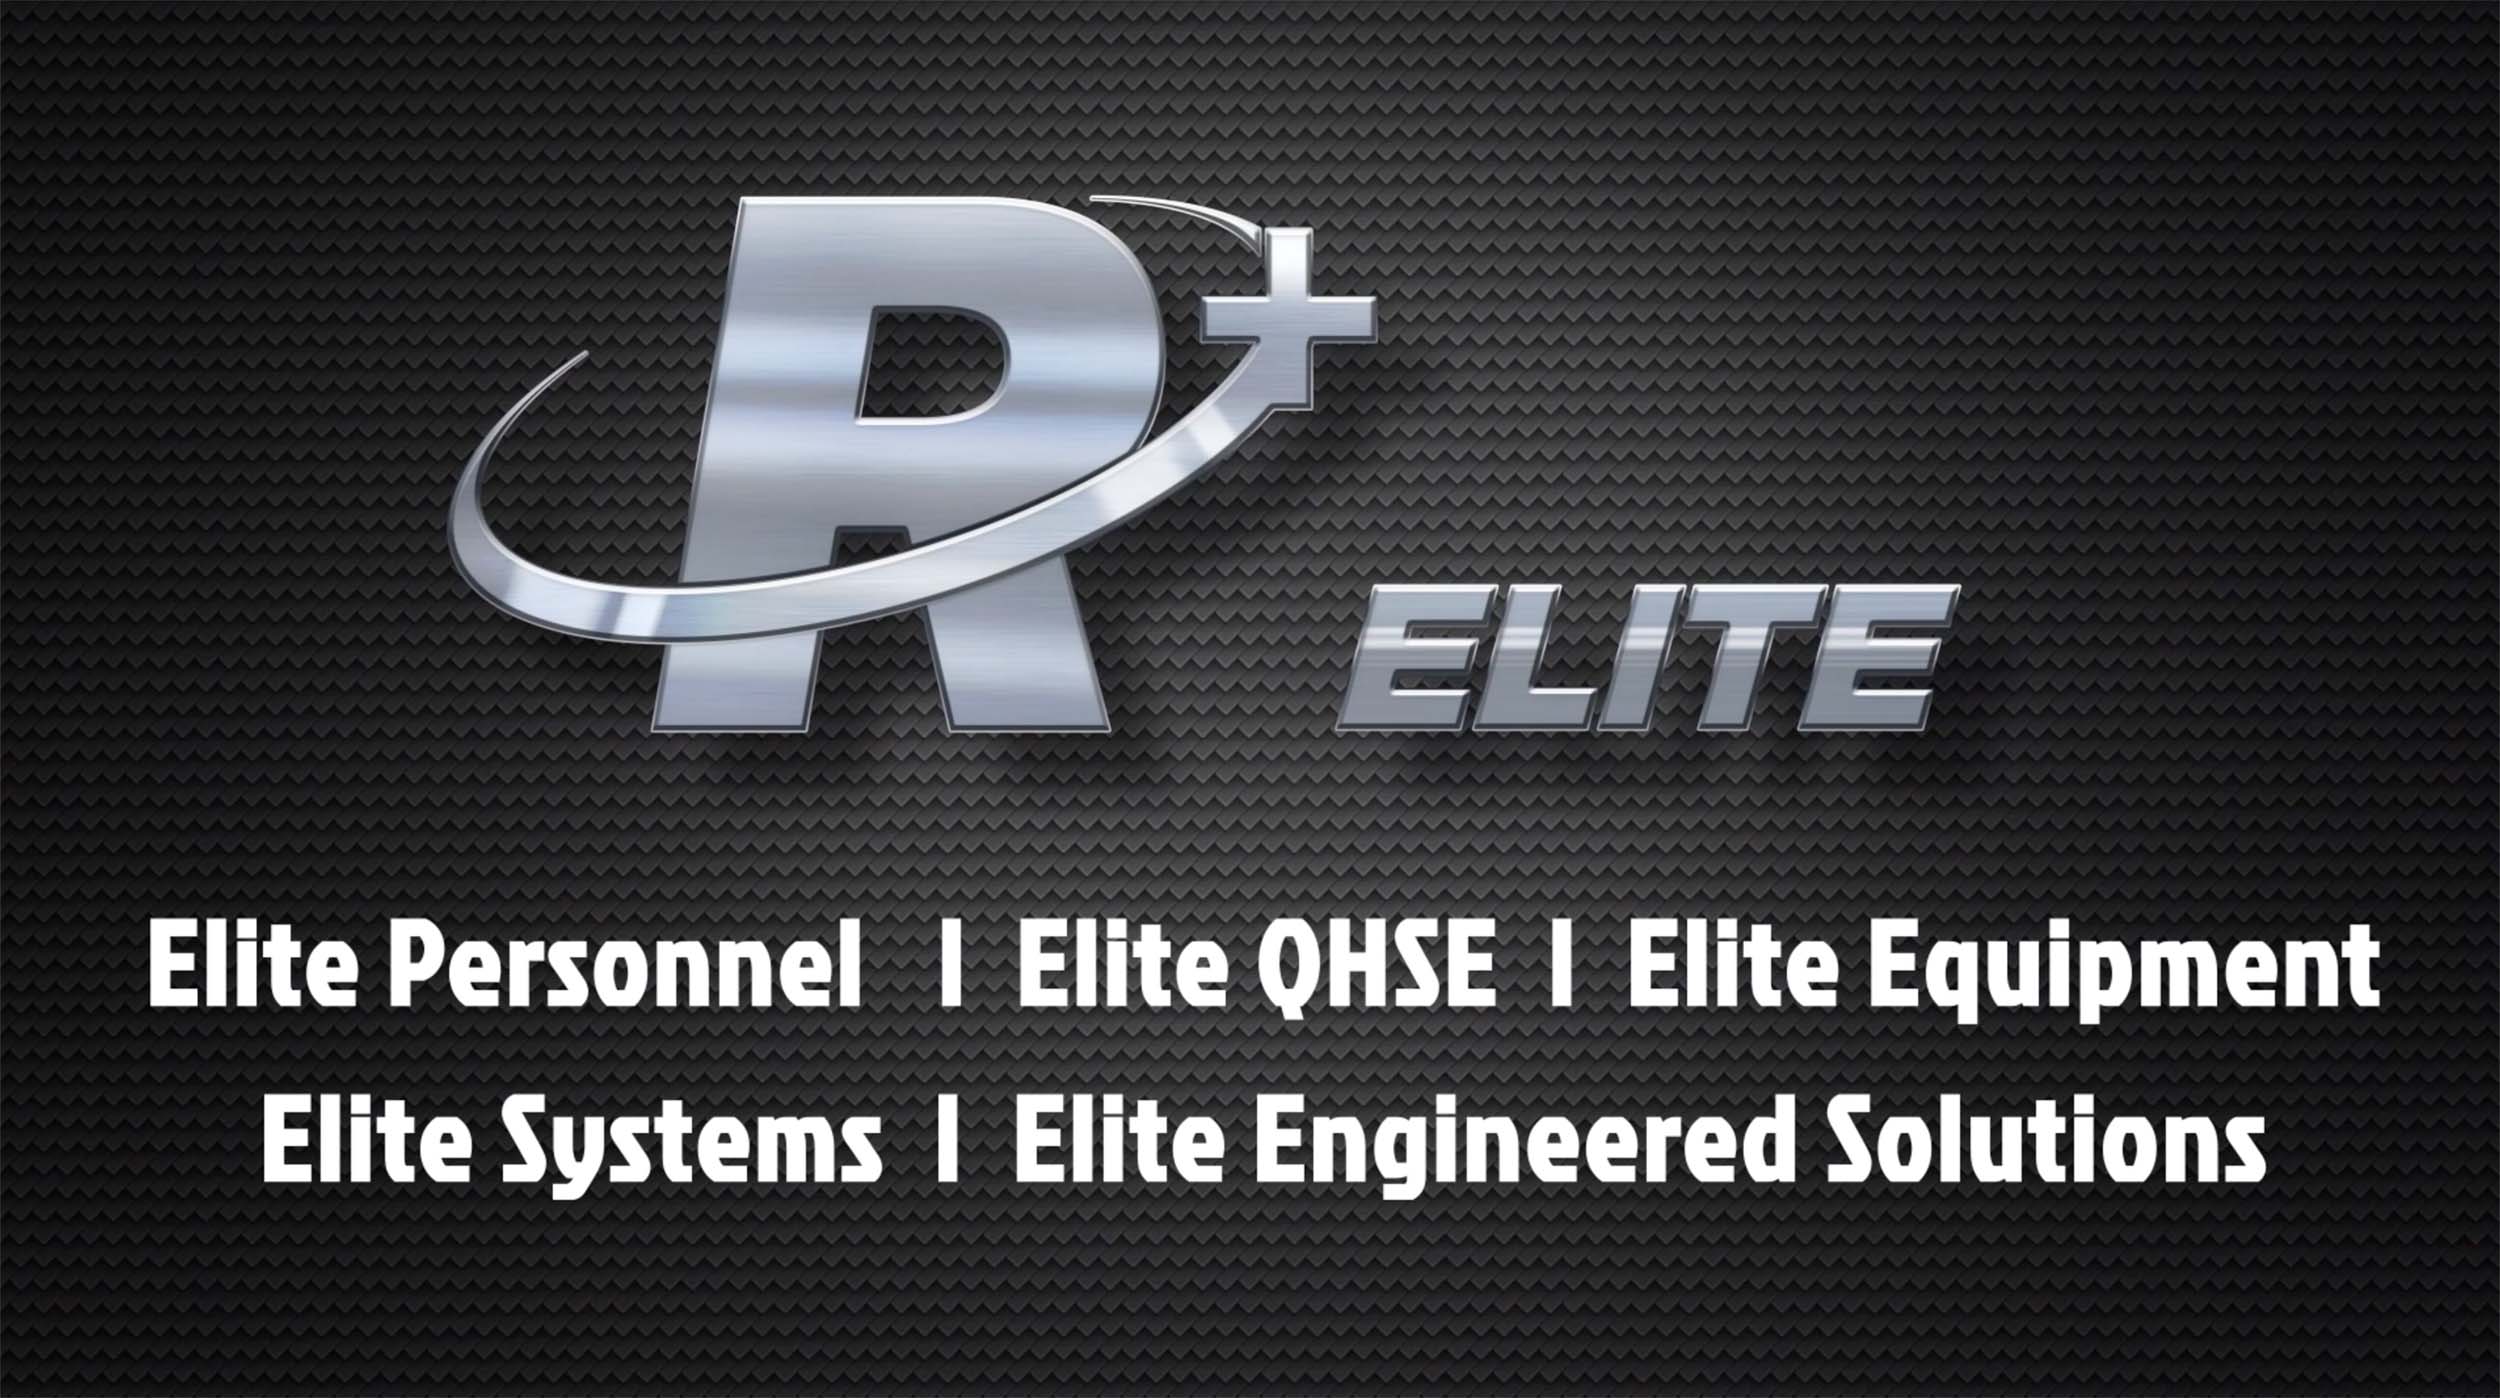 Ranger Elite Logo - Elite Personnel, Elite QHSE, Elite Equipment, Elite Systems and Elite Engineered Solutions